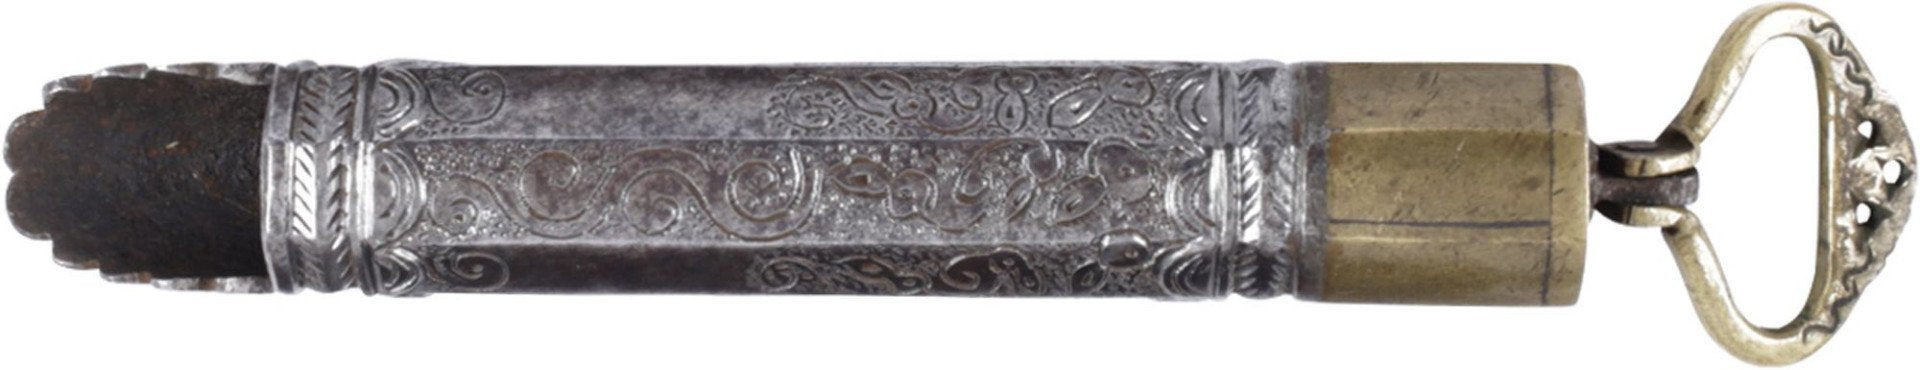 RARE 17th CENTURY PERSIAN POWDER MEASURE - Fagan Arms